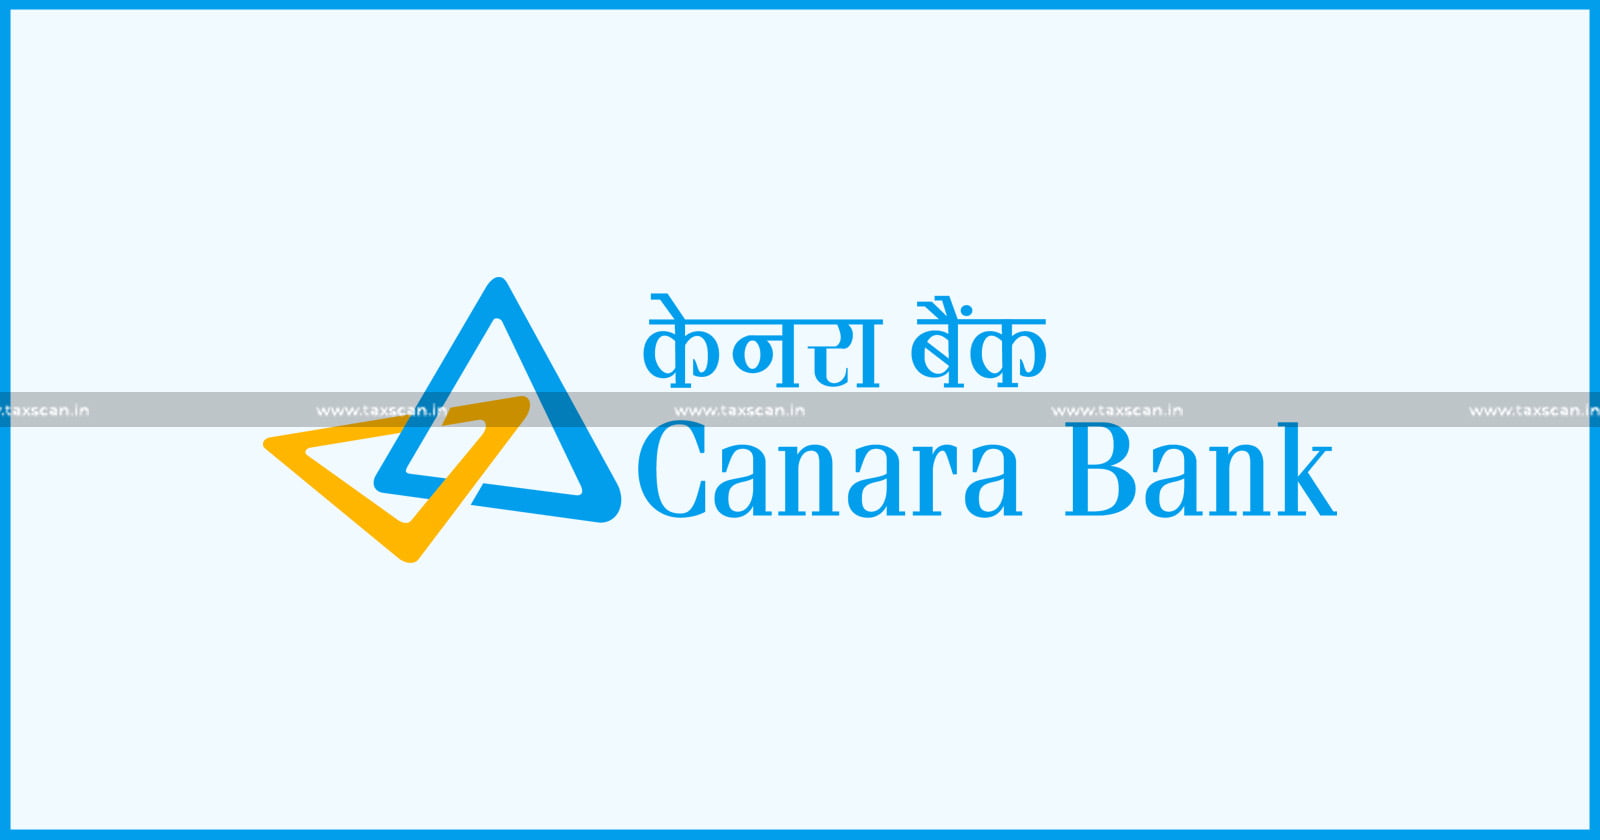 Rejection of ITC Claim - ITC - Input Tax Credit - Delhi High Court - Canara Bank - TAXSCAN